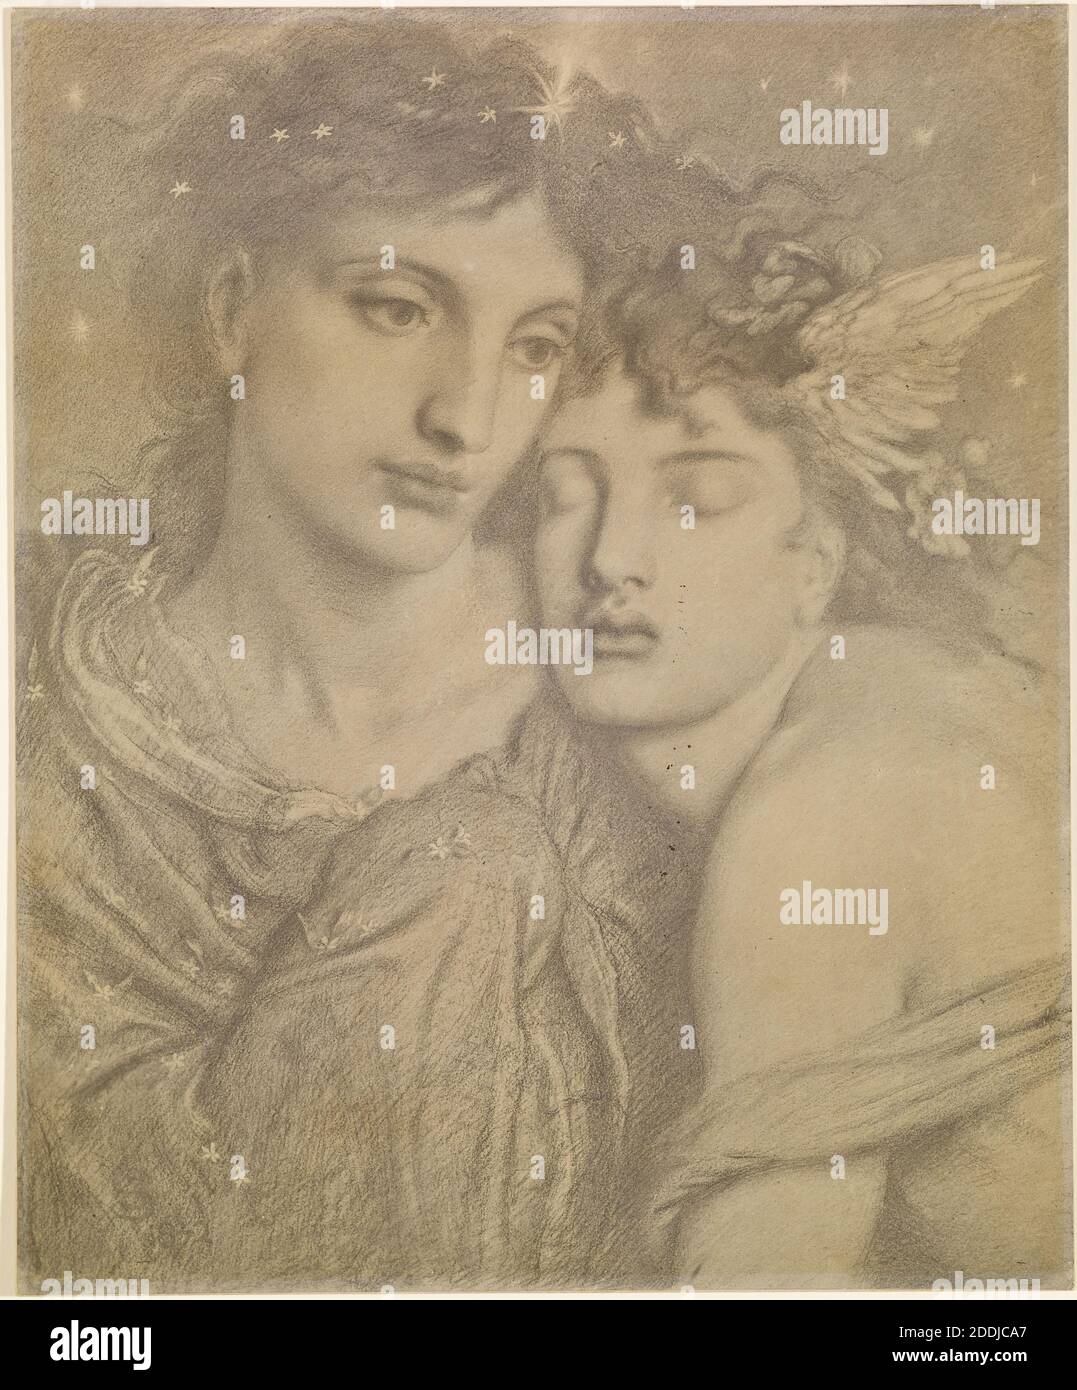 Night and Sleep, 1872 Photographer: Frederick Hollyer After Simeon Solomon, Art Movement, Pre-Raphaelite, Platinum print Stock Photo